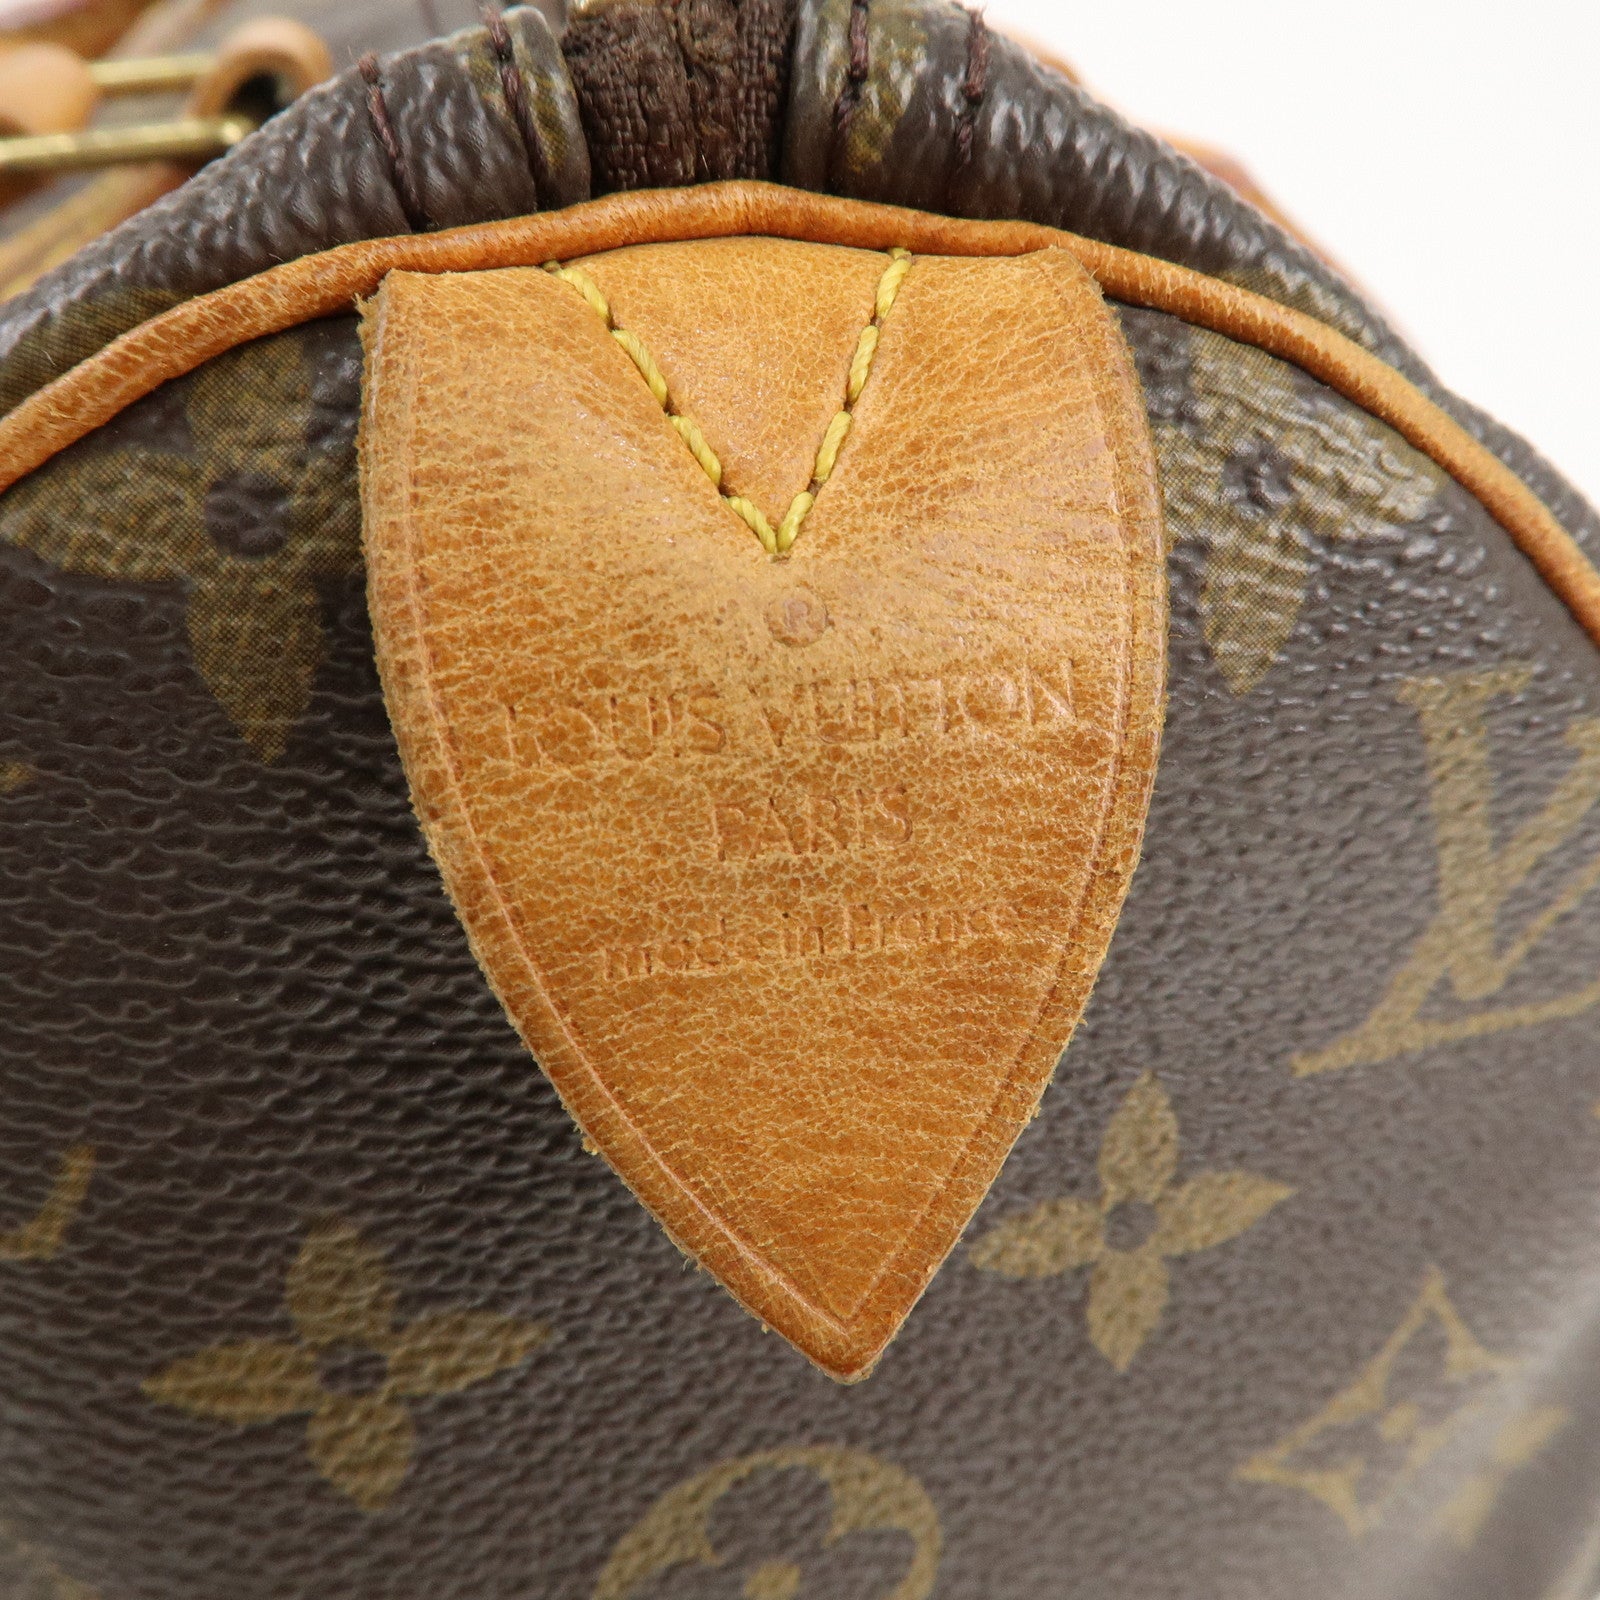 Louis Vuitton Speedy 30 M41526 Monogram Handbag 11458